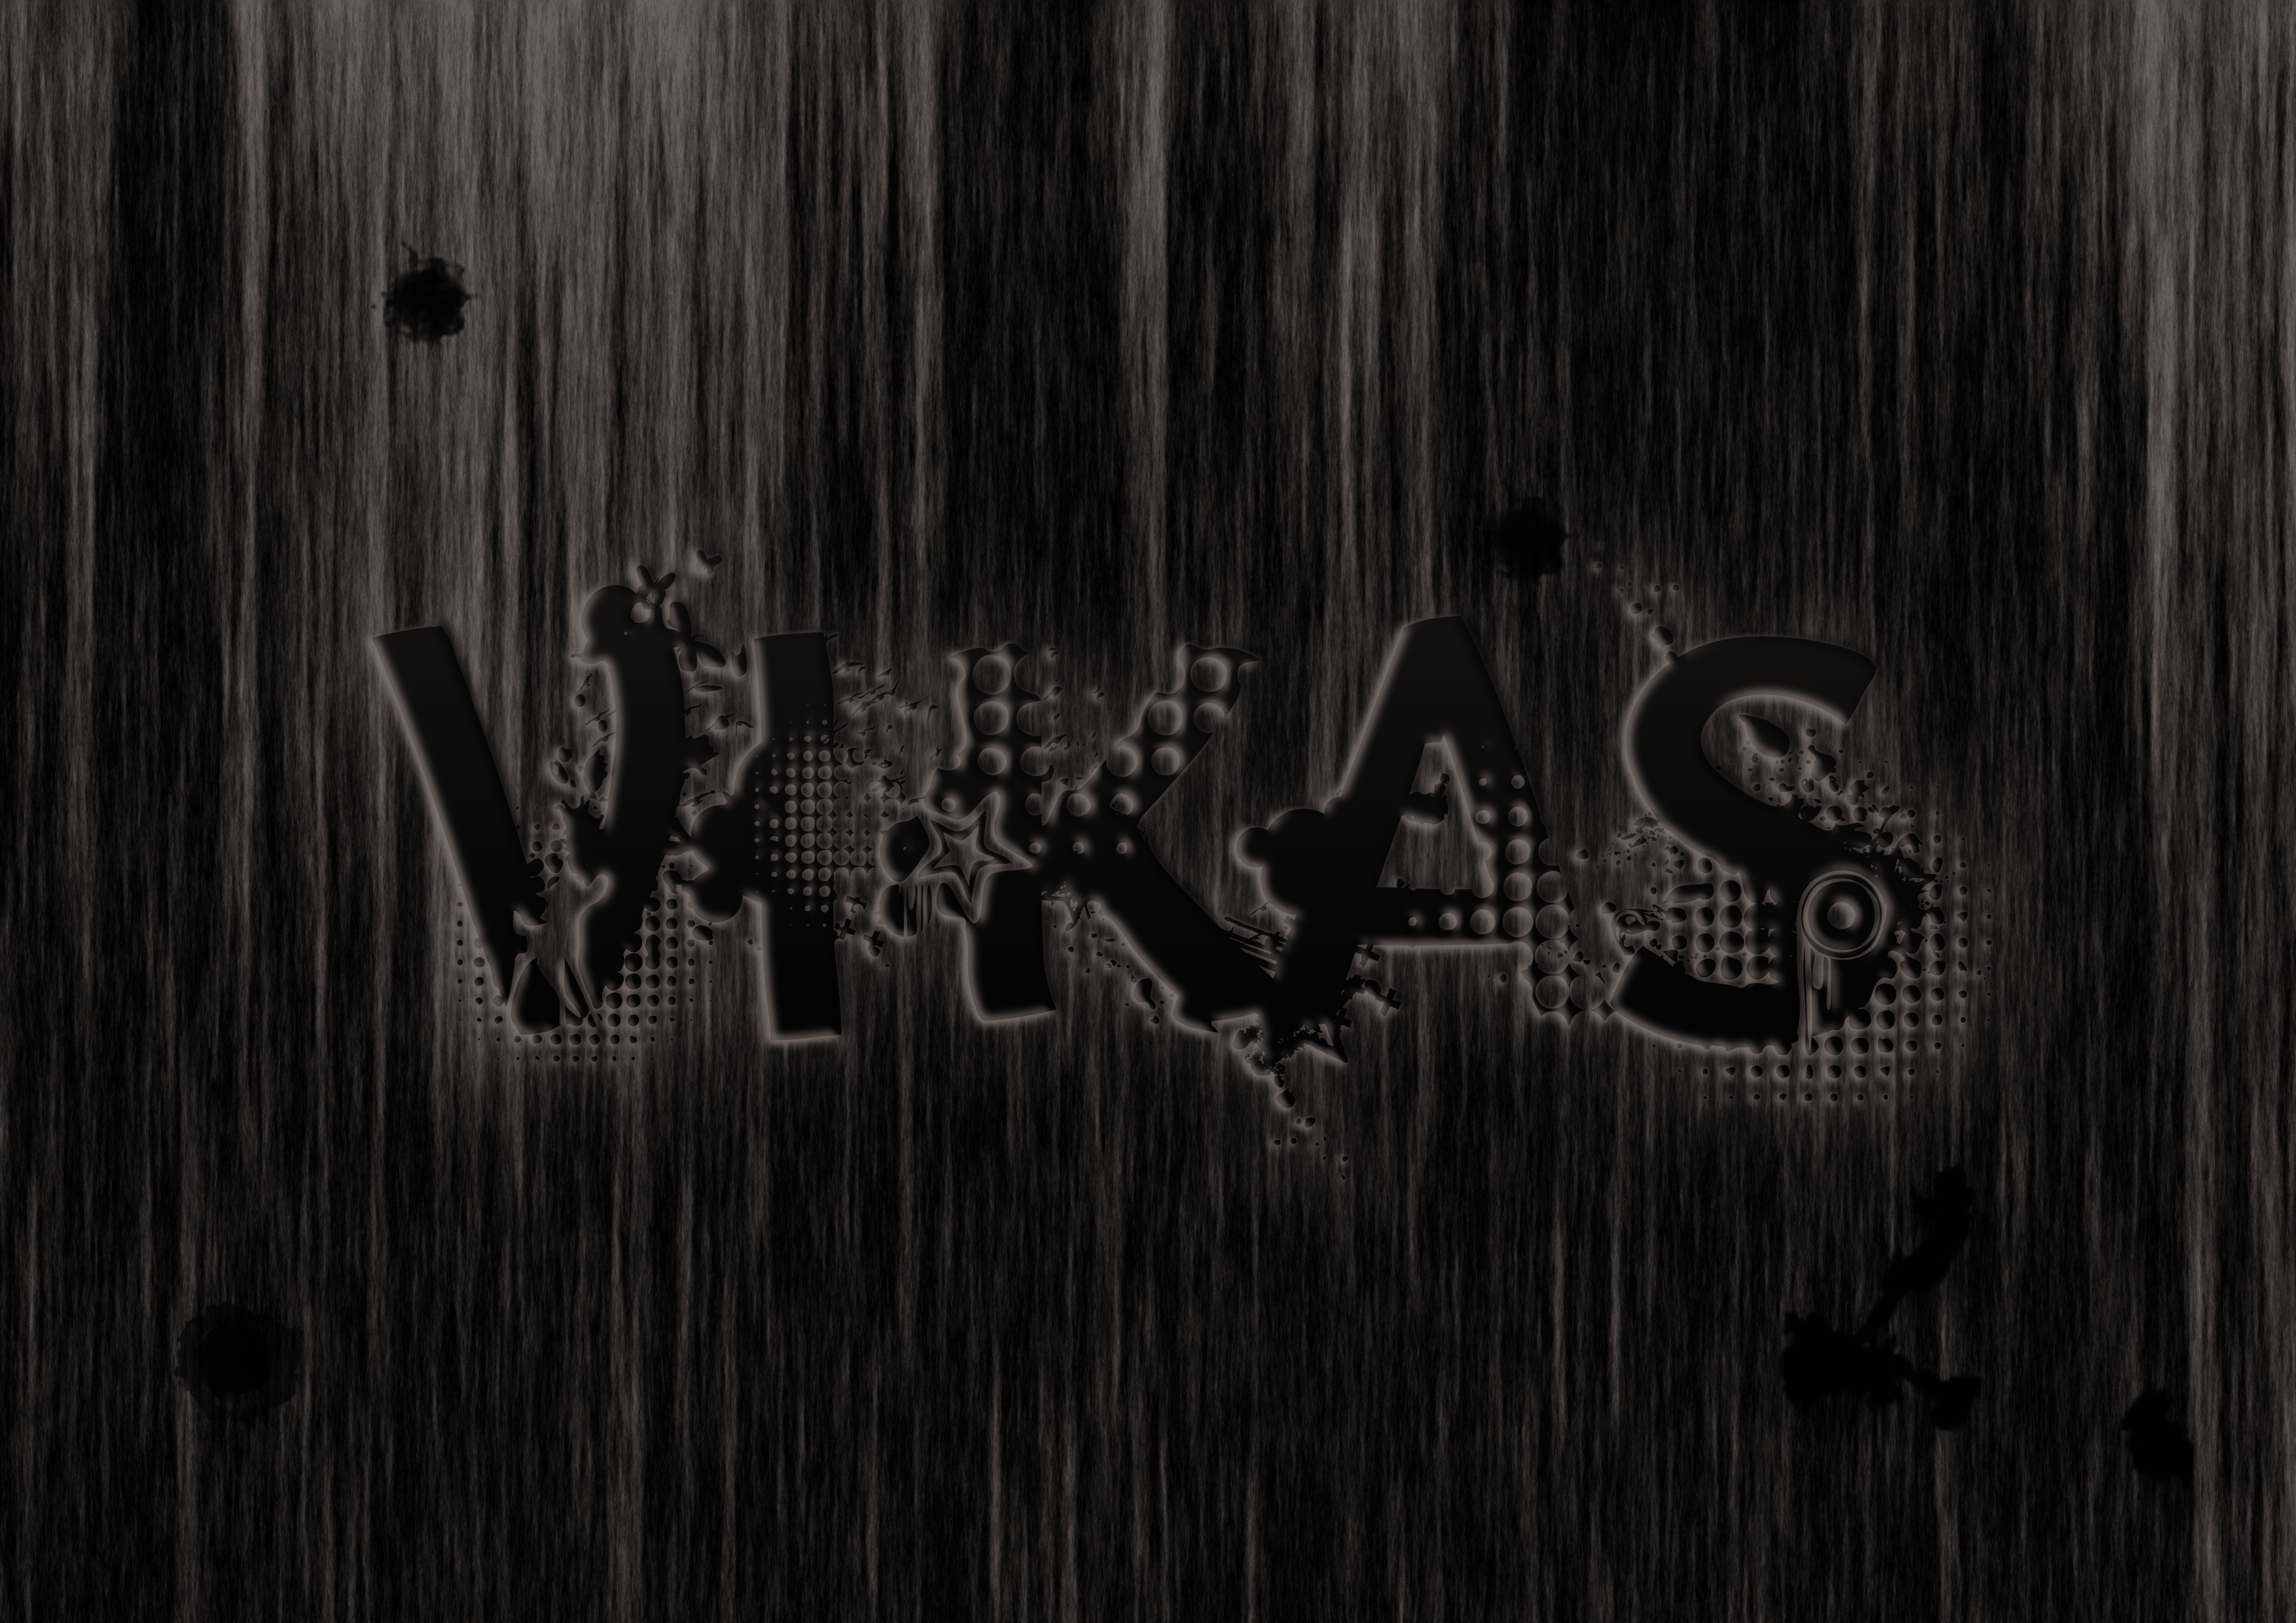 sfondo del nome vikash,nero,testo,font,legna,bianco e nero